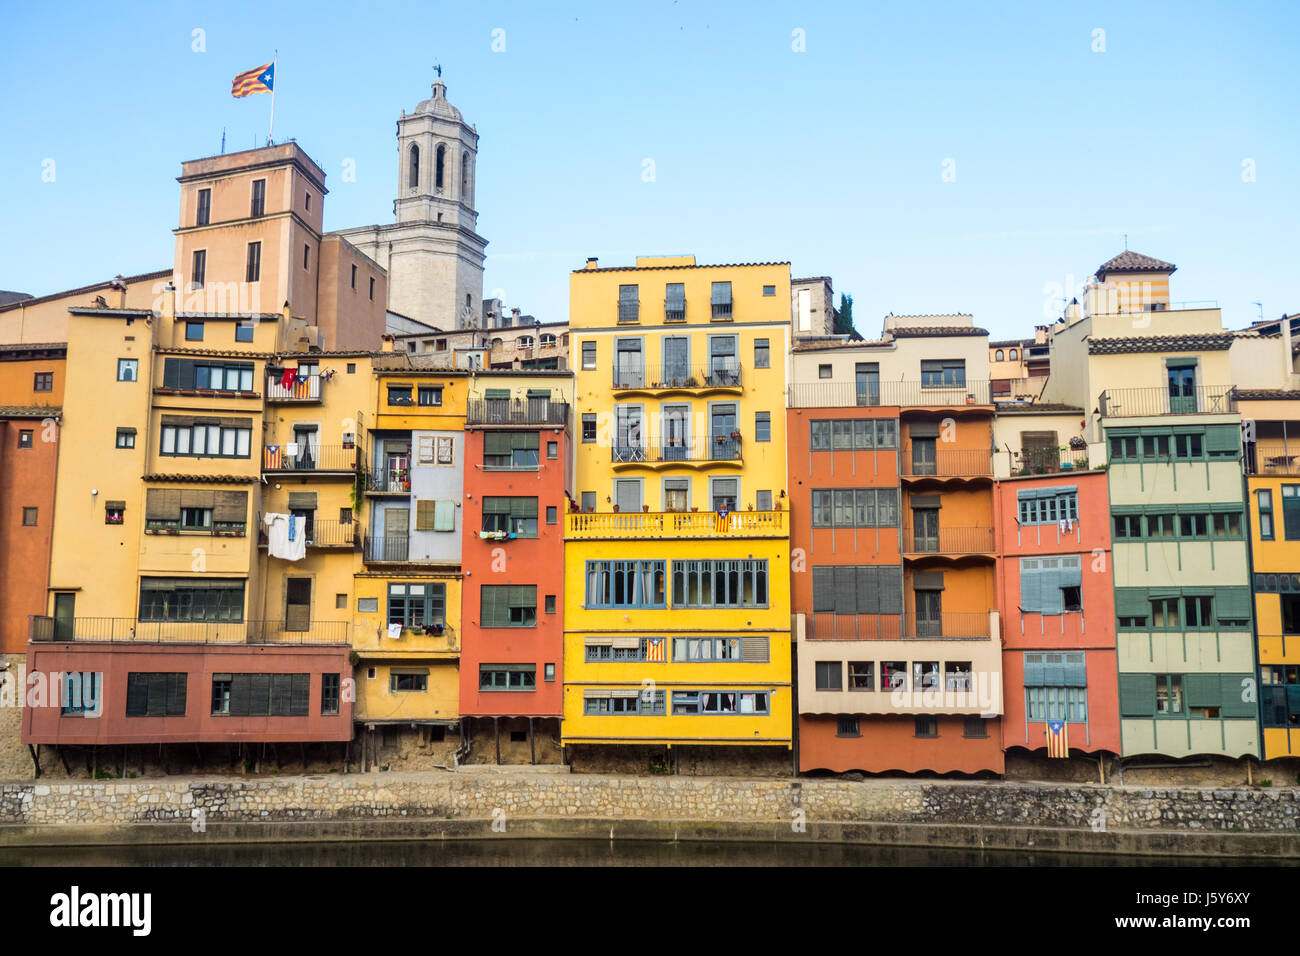 Casi de l'Onyar, le case sul fiume Onyar, Girona, Spagna. Foto Stock